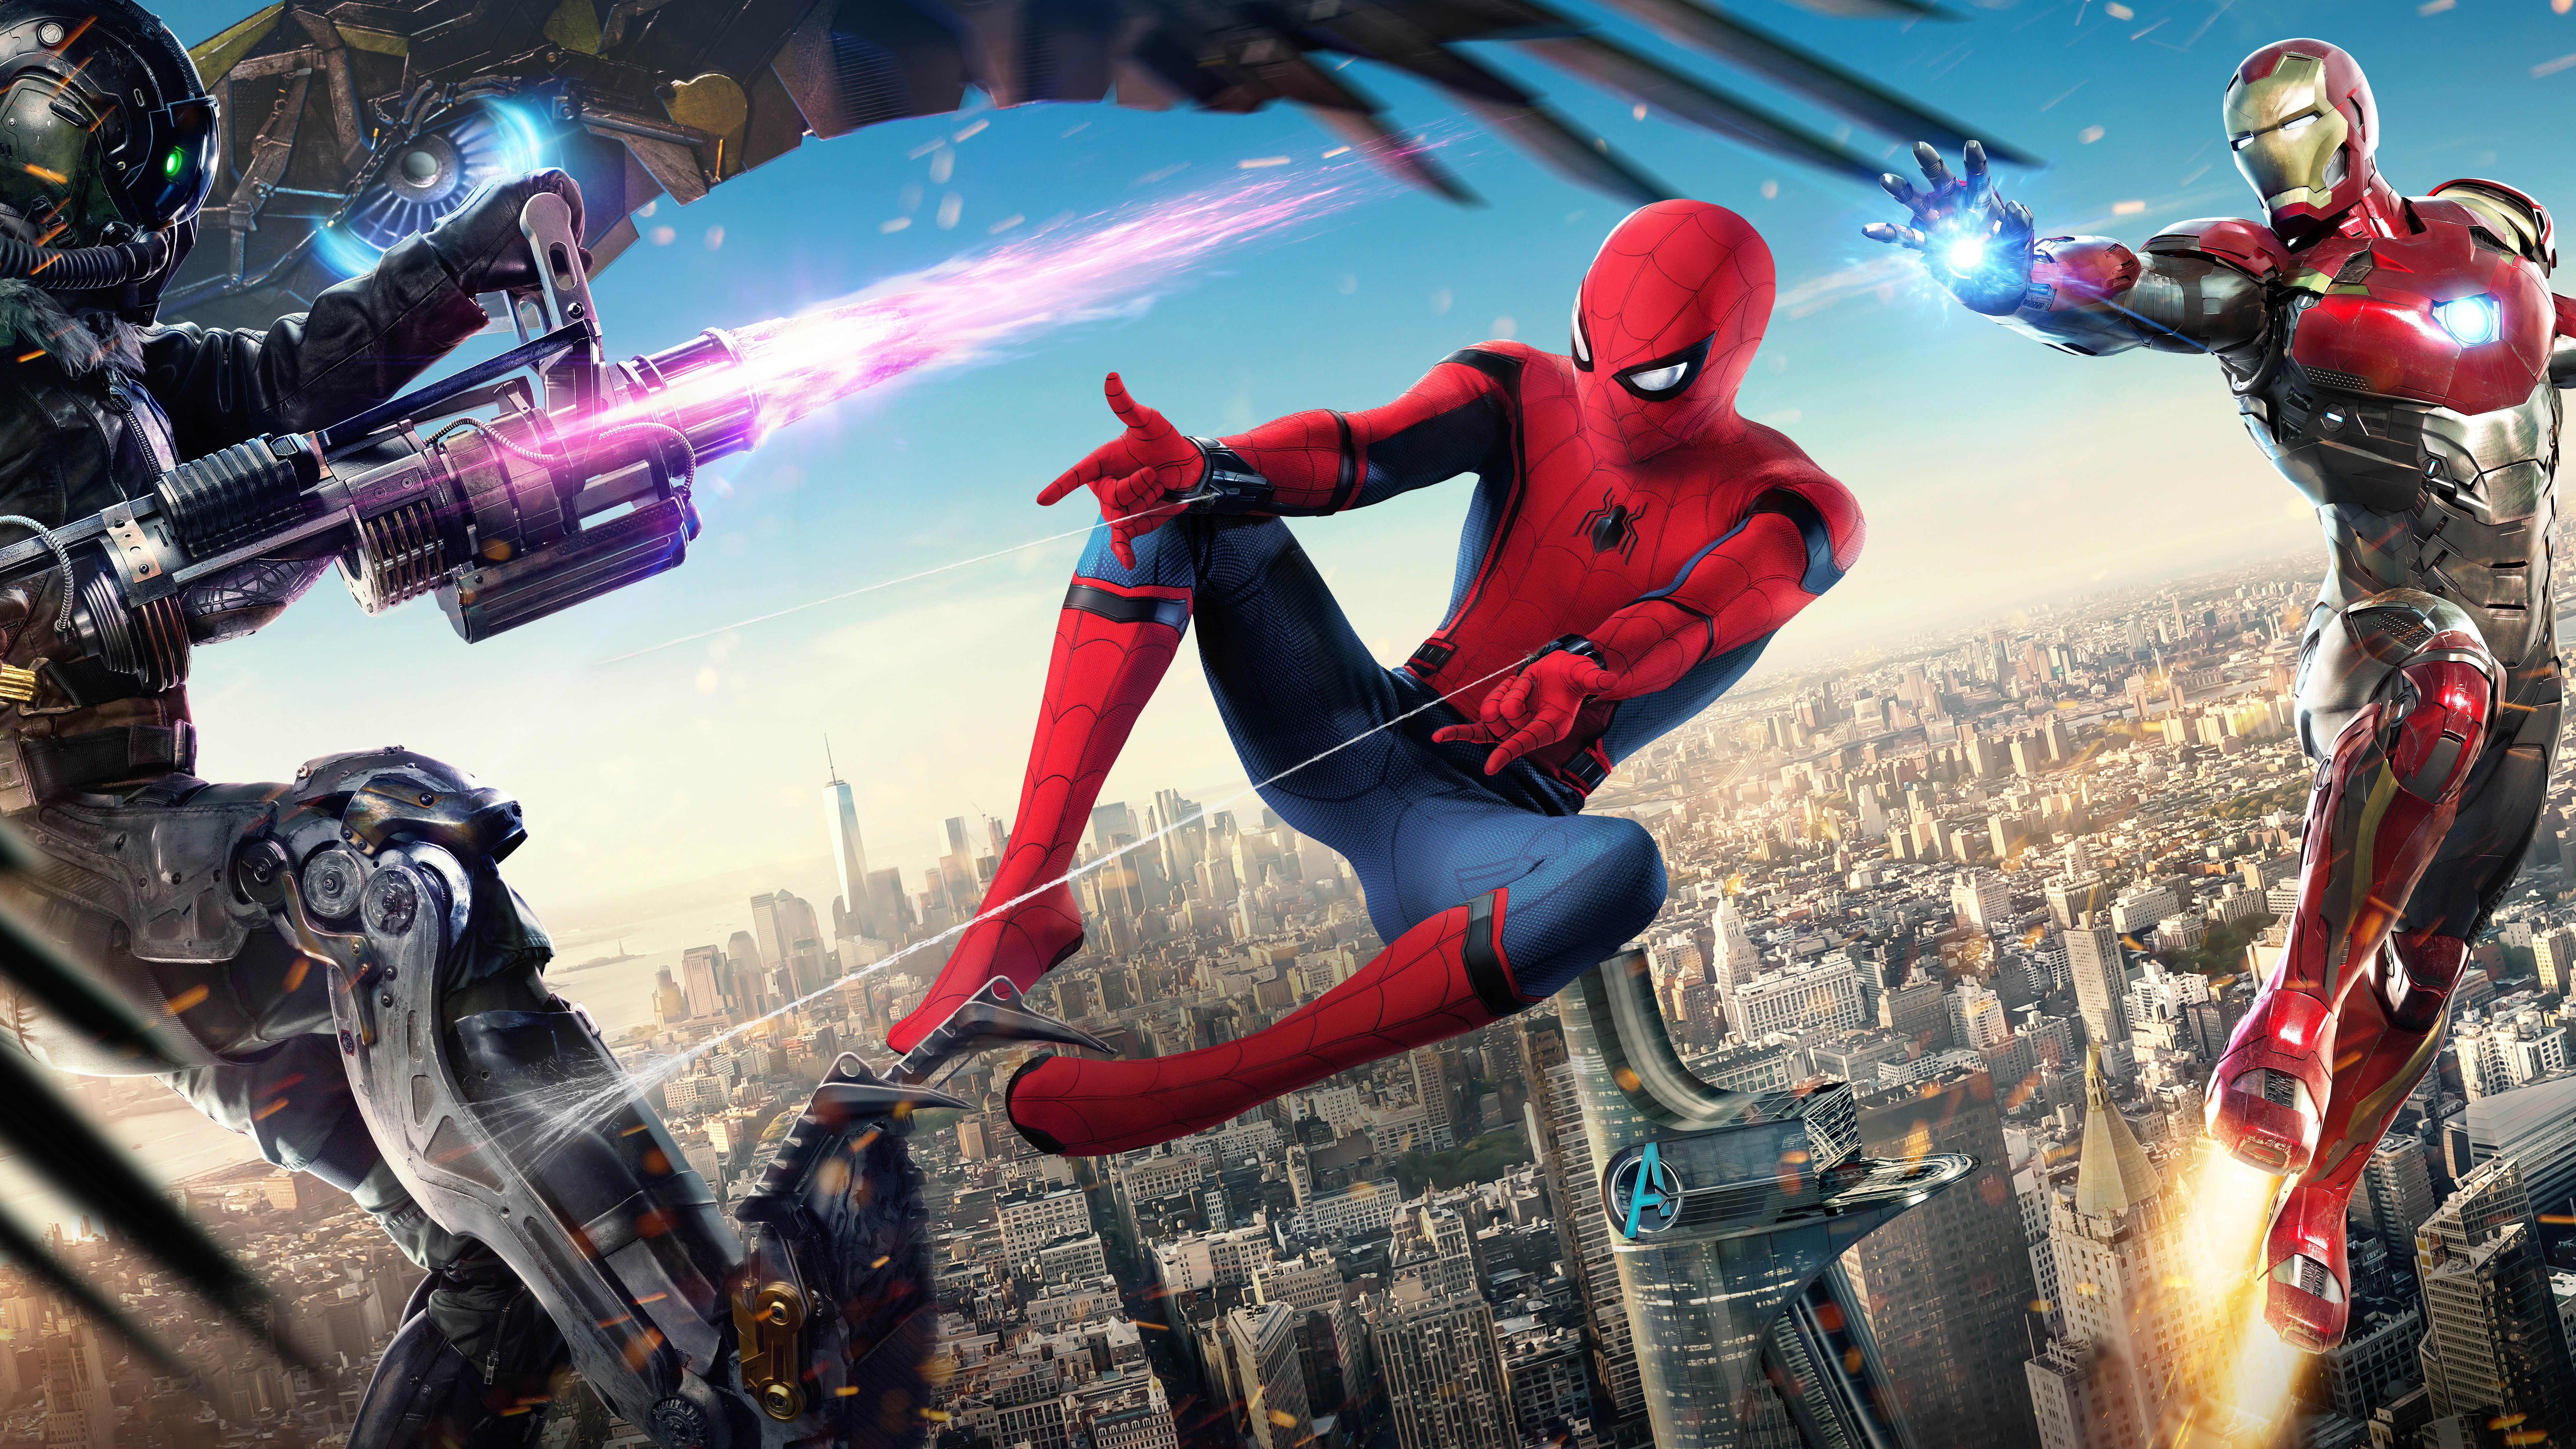 General 7680x4320 Iron Man cityscape Spider-Man Spider-Man: Homecoming superhero Marvel Comics